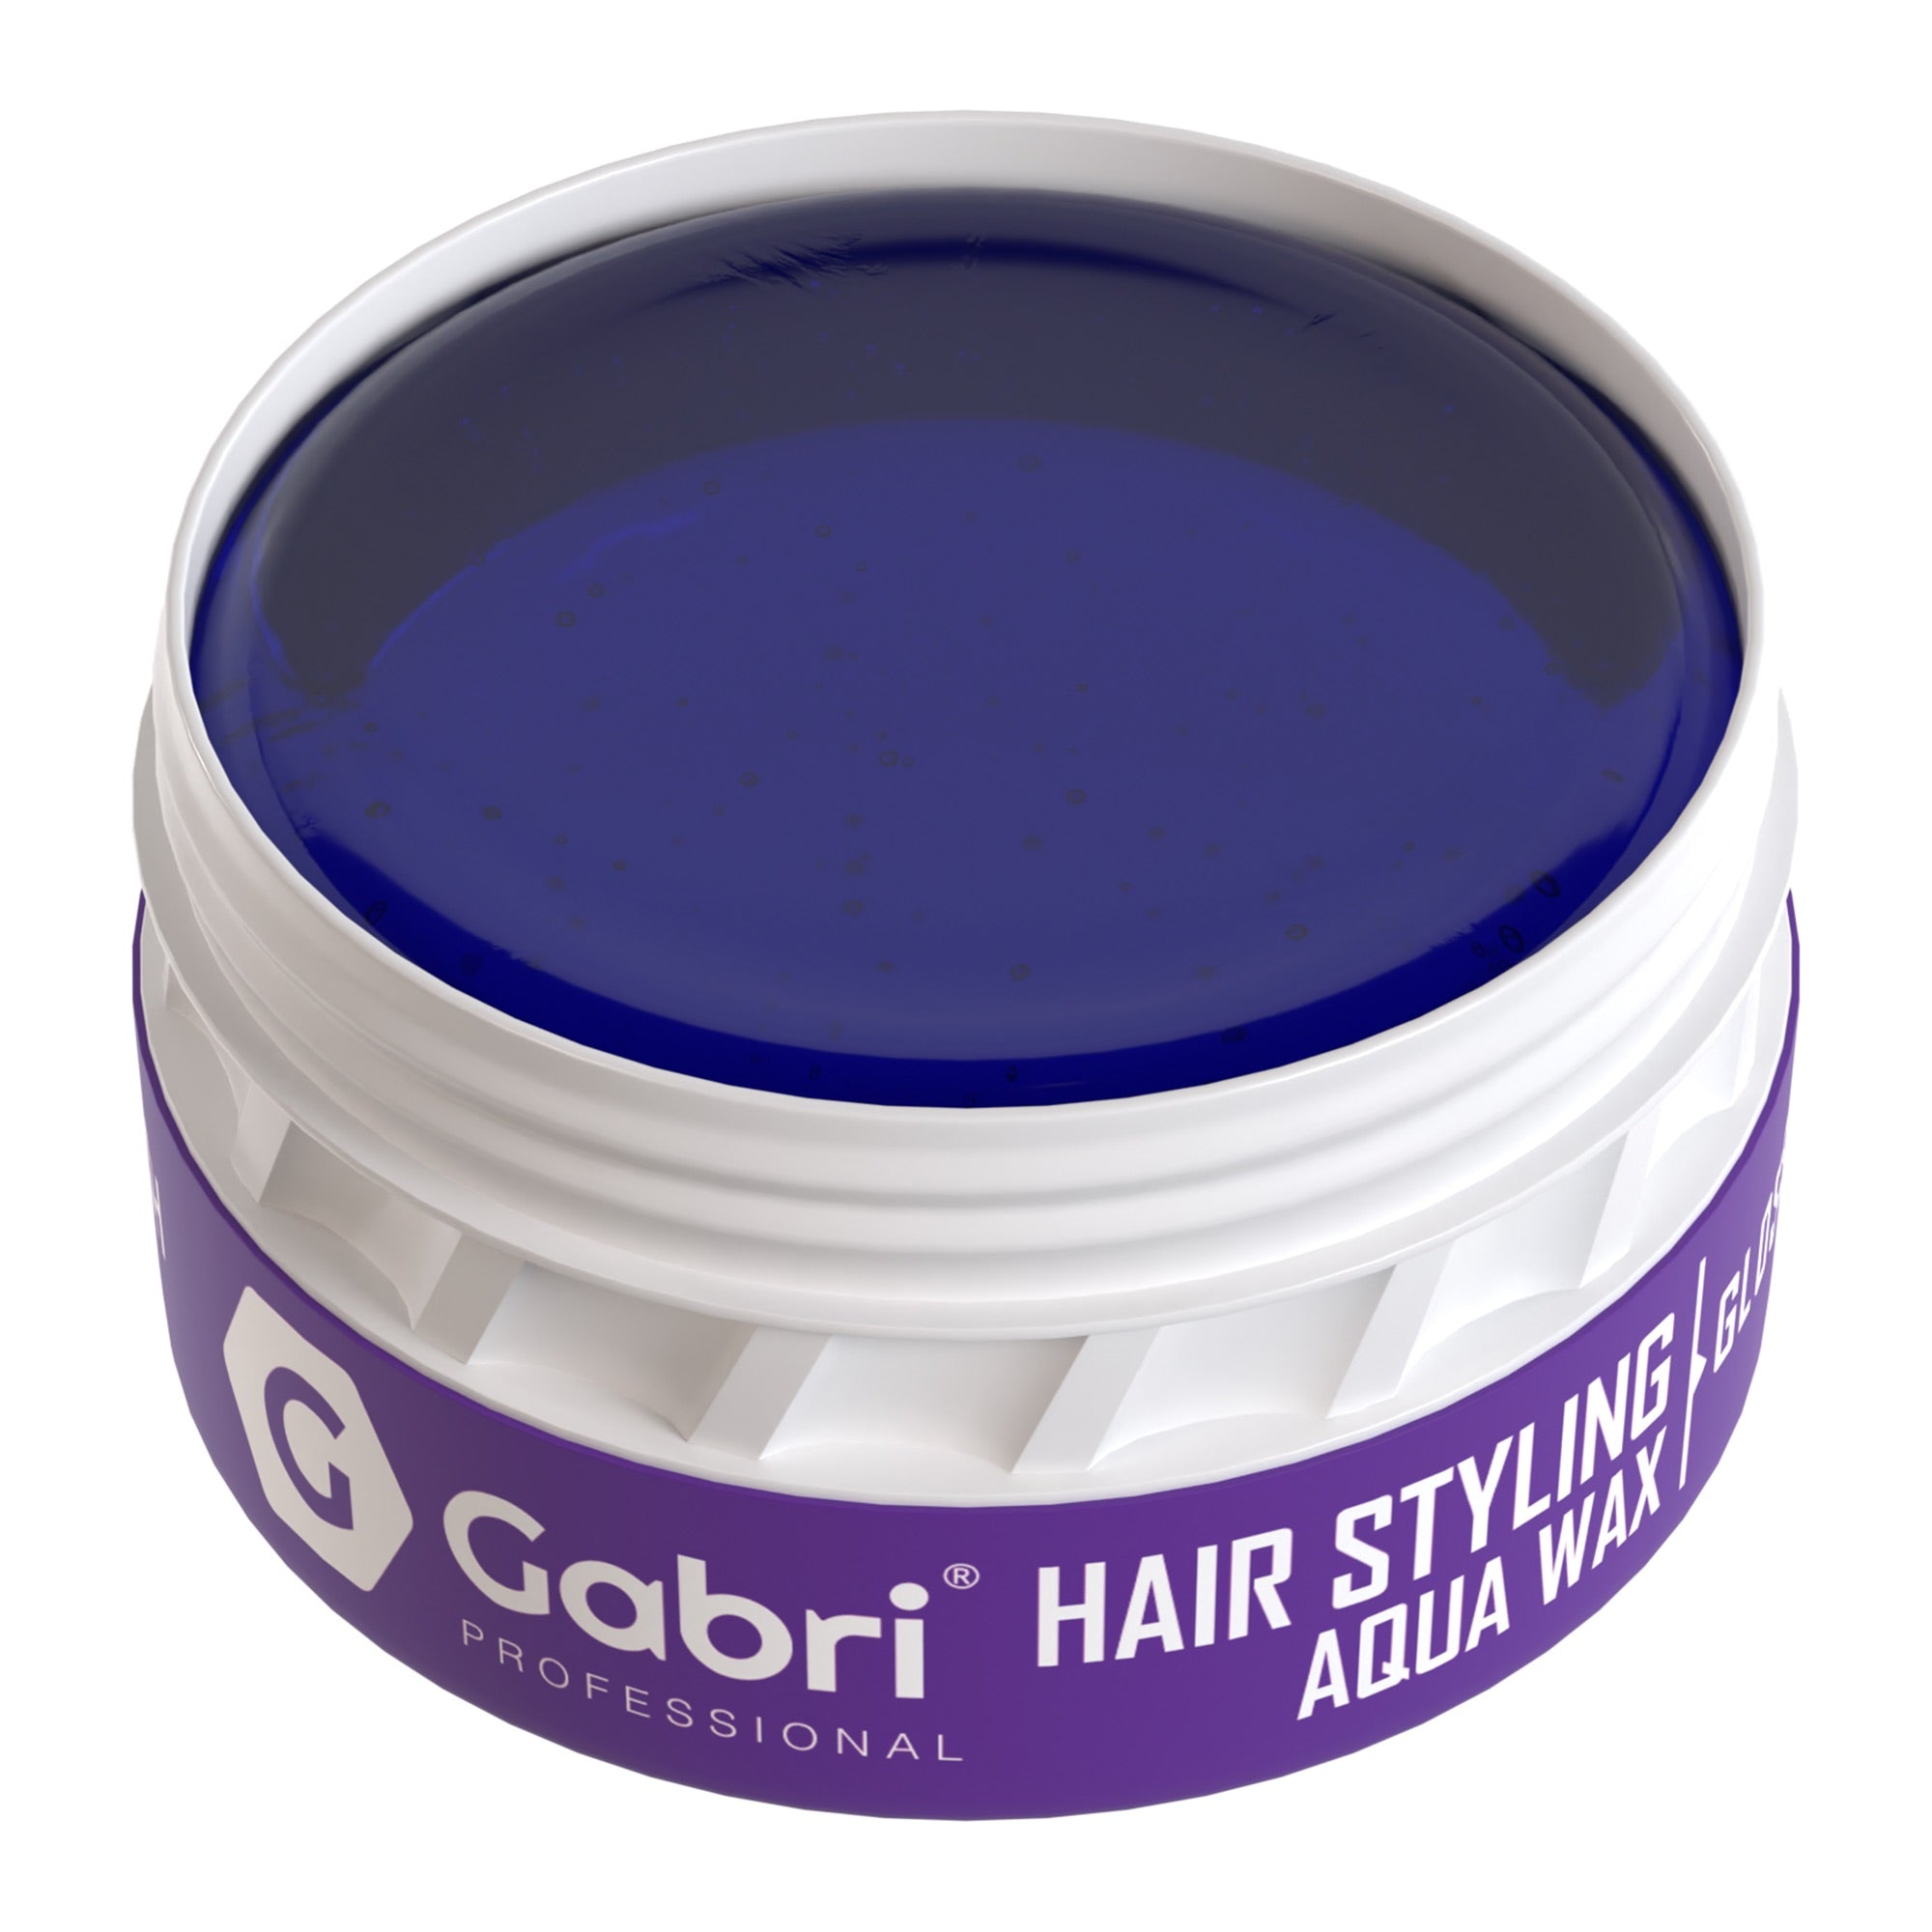 Gabri Professional - Hair Styling Wax Aqua Gloss Finish 150ml